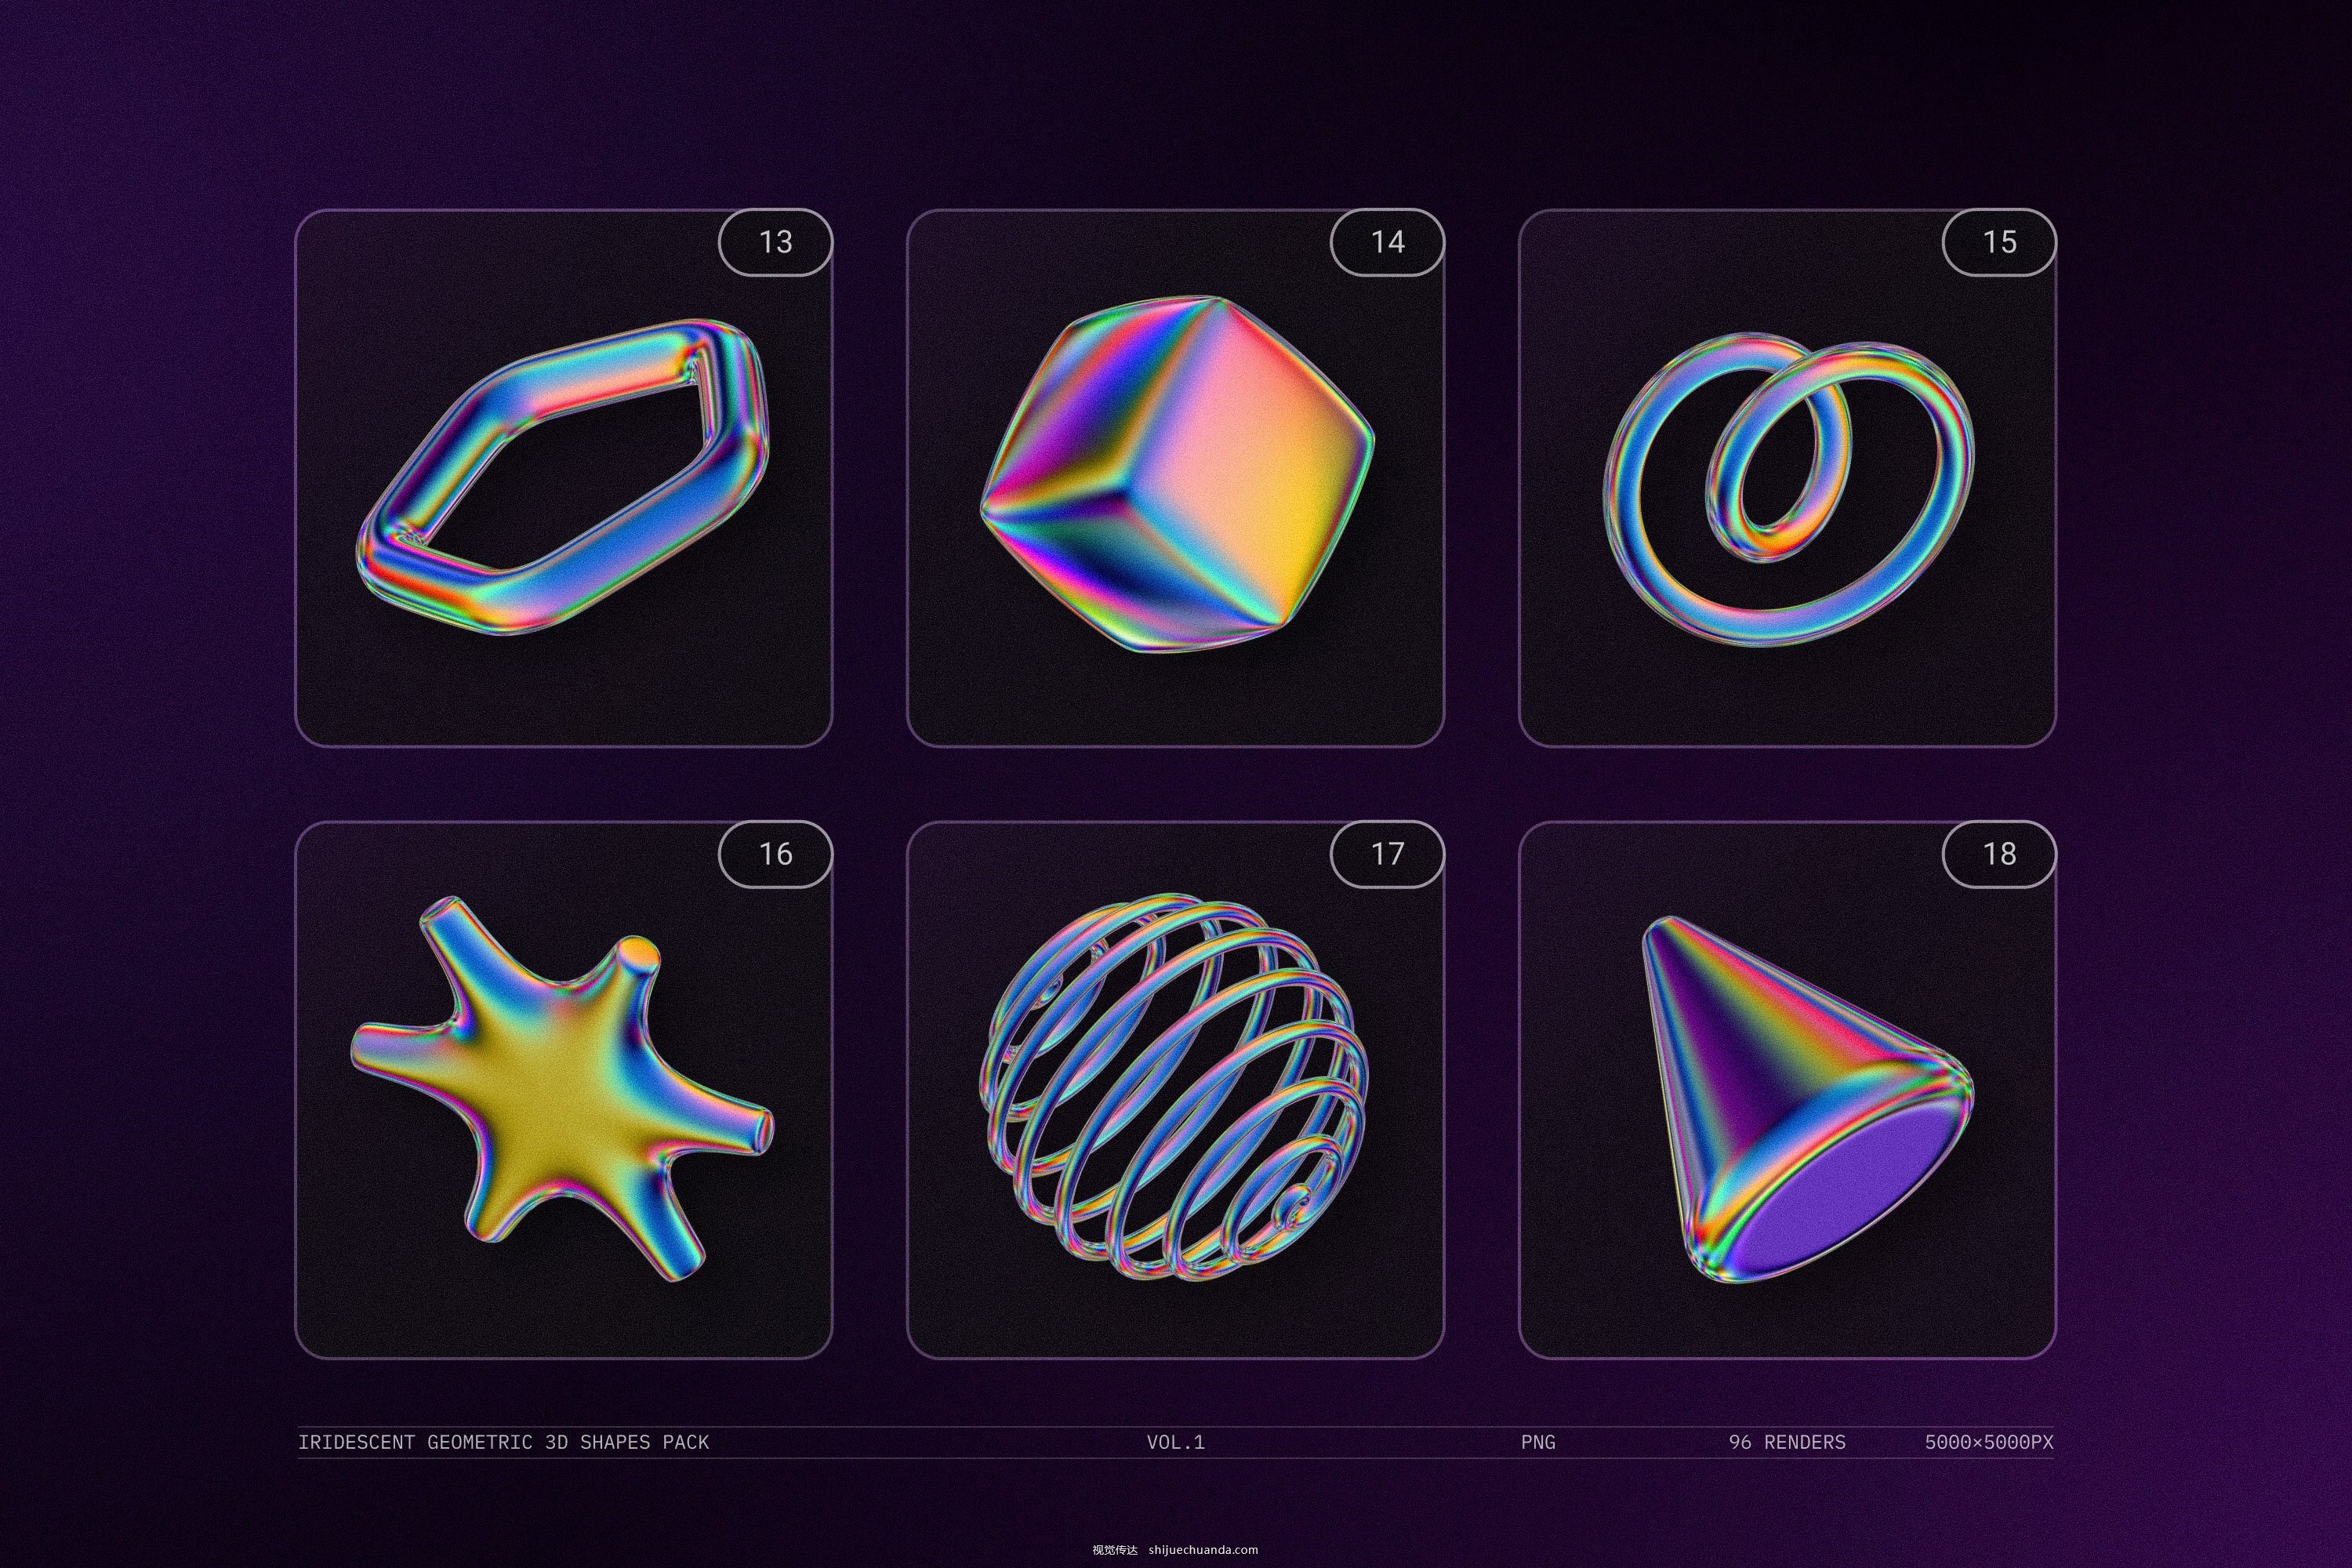 Iridescent geometric 3D shapes pack Vol.1-4.jpg